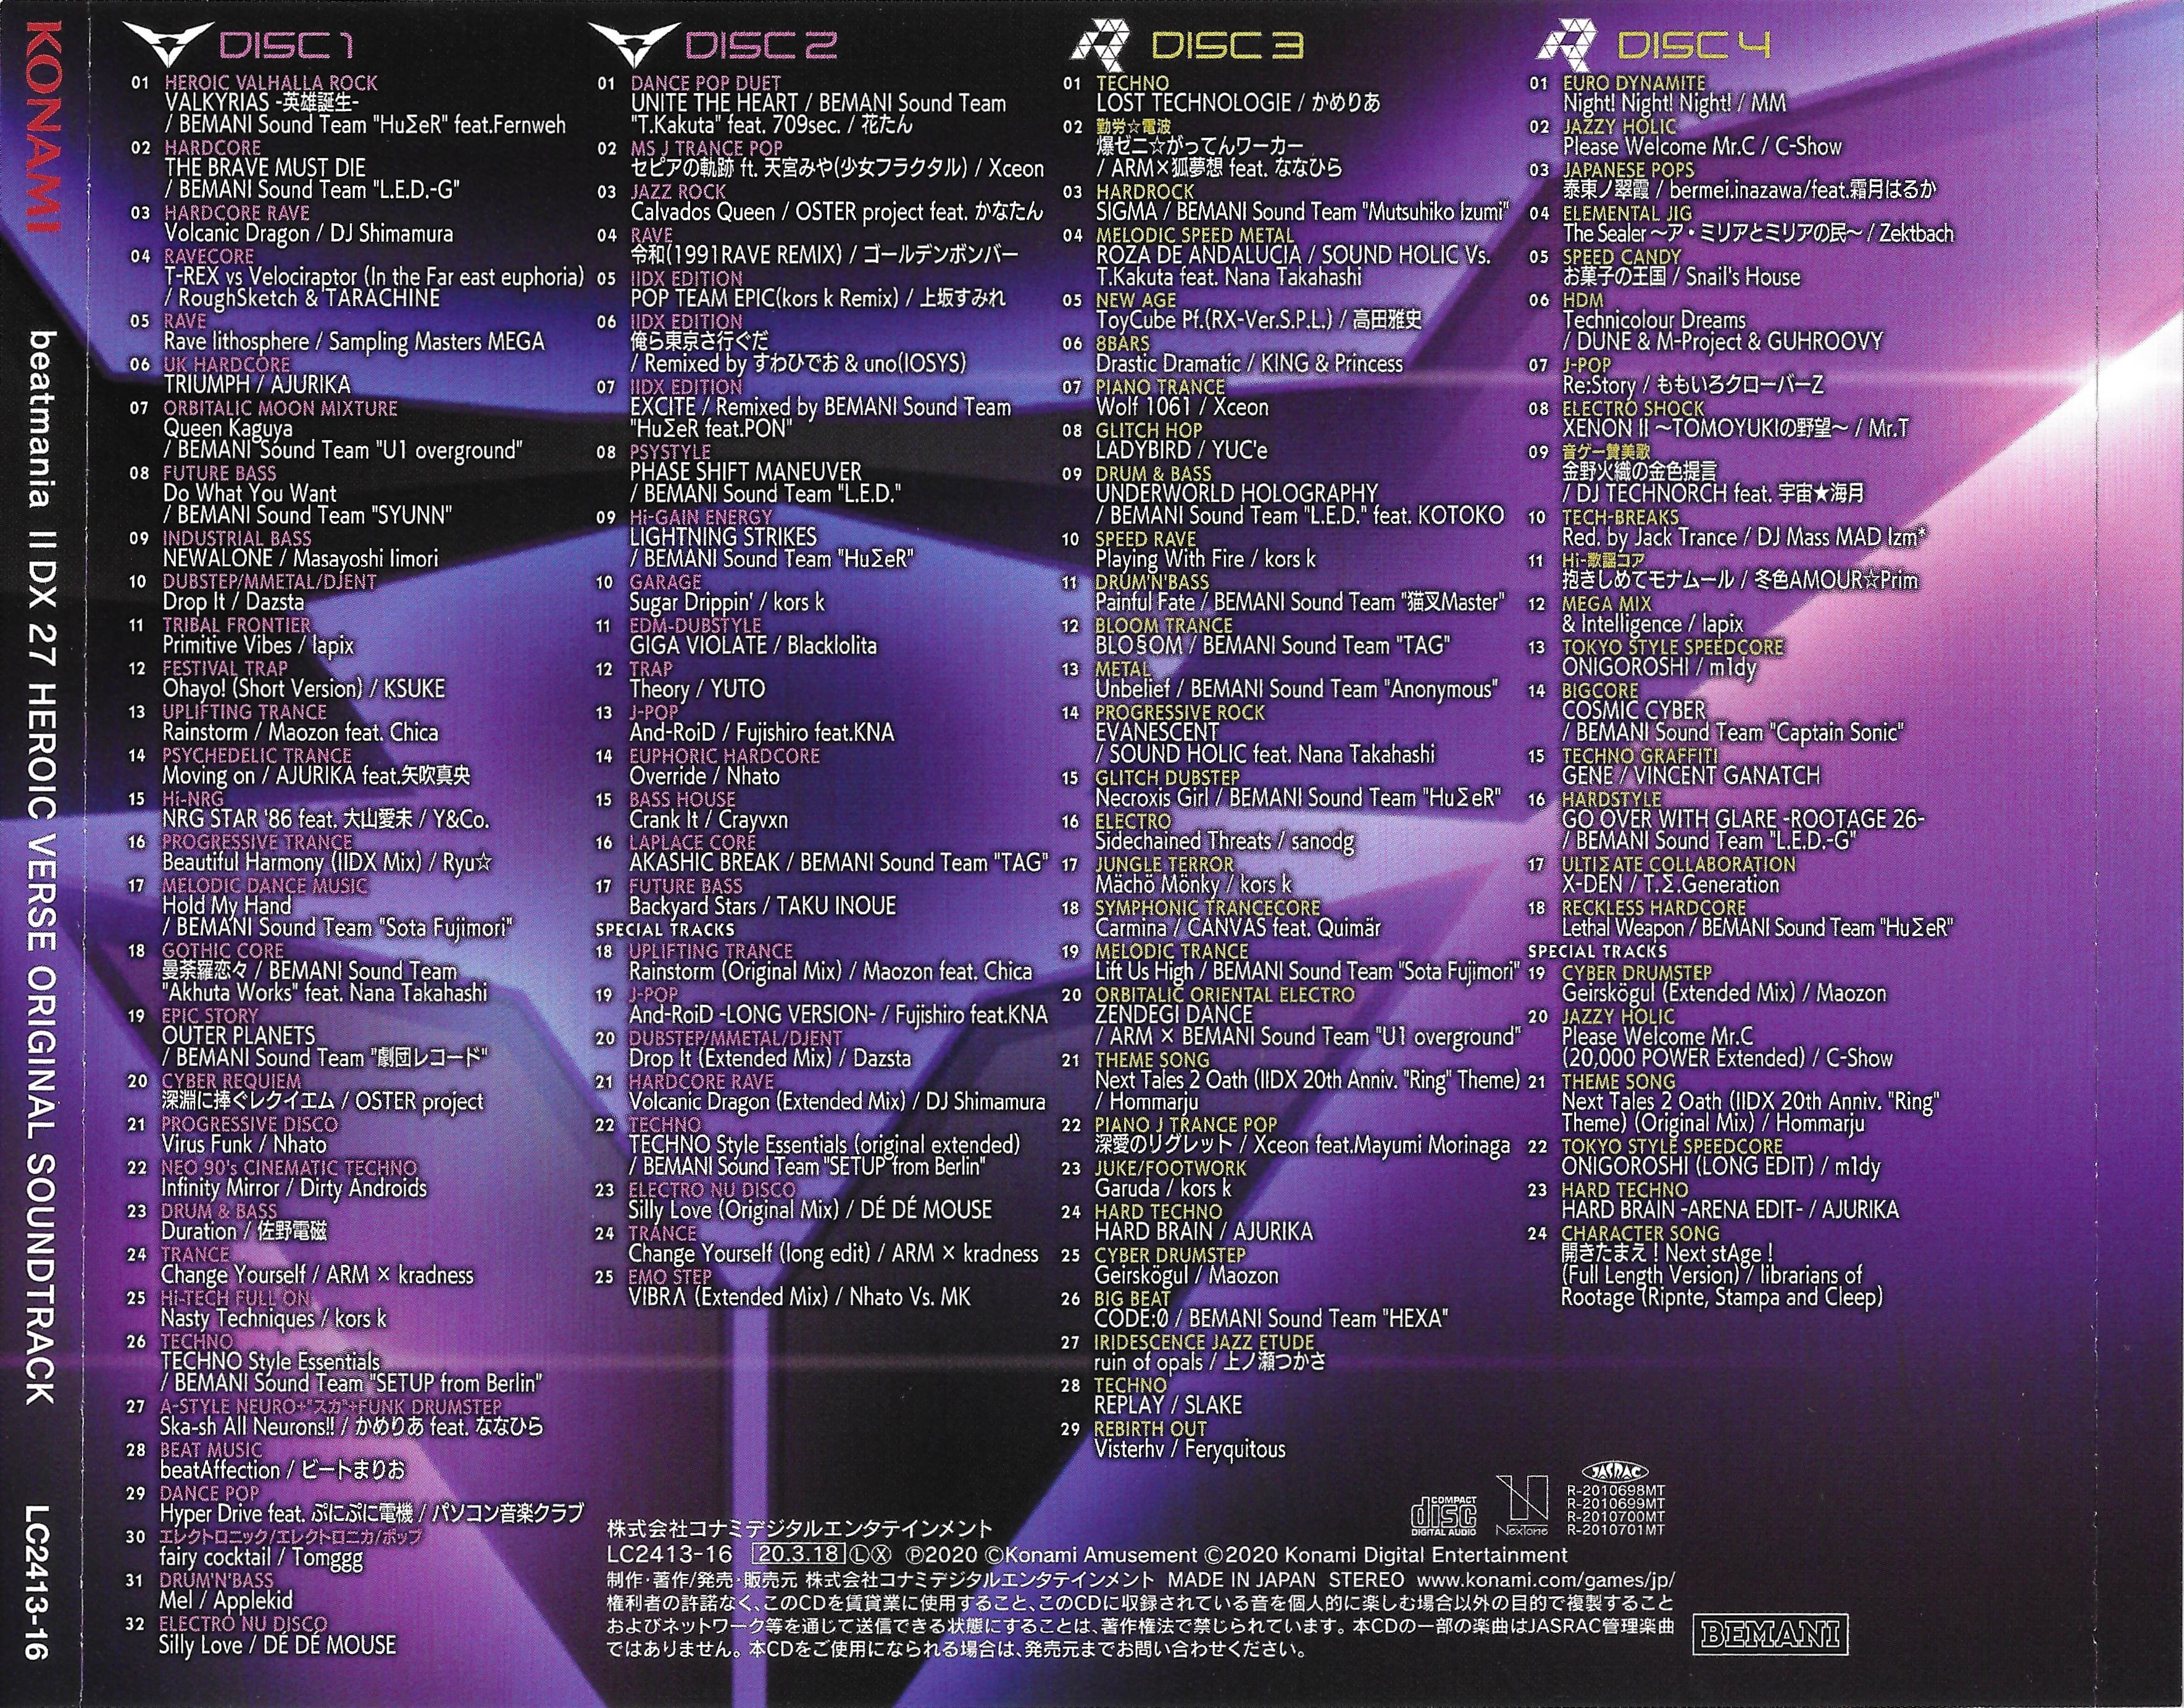 ●cYsmix「ESCAPISM」完品 beatmaniaⅡDX Nhato COMPLEXTRO エレクトロ DUBSTEP EDM AD:TRANCE DIVERSE SYSTEM WAVFORME